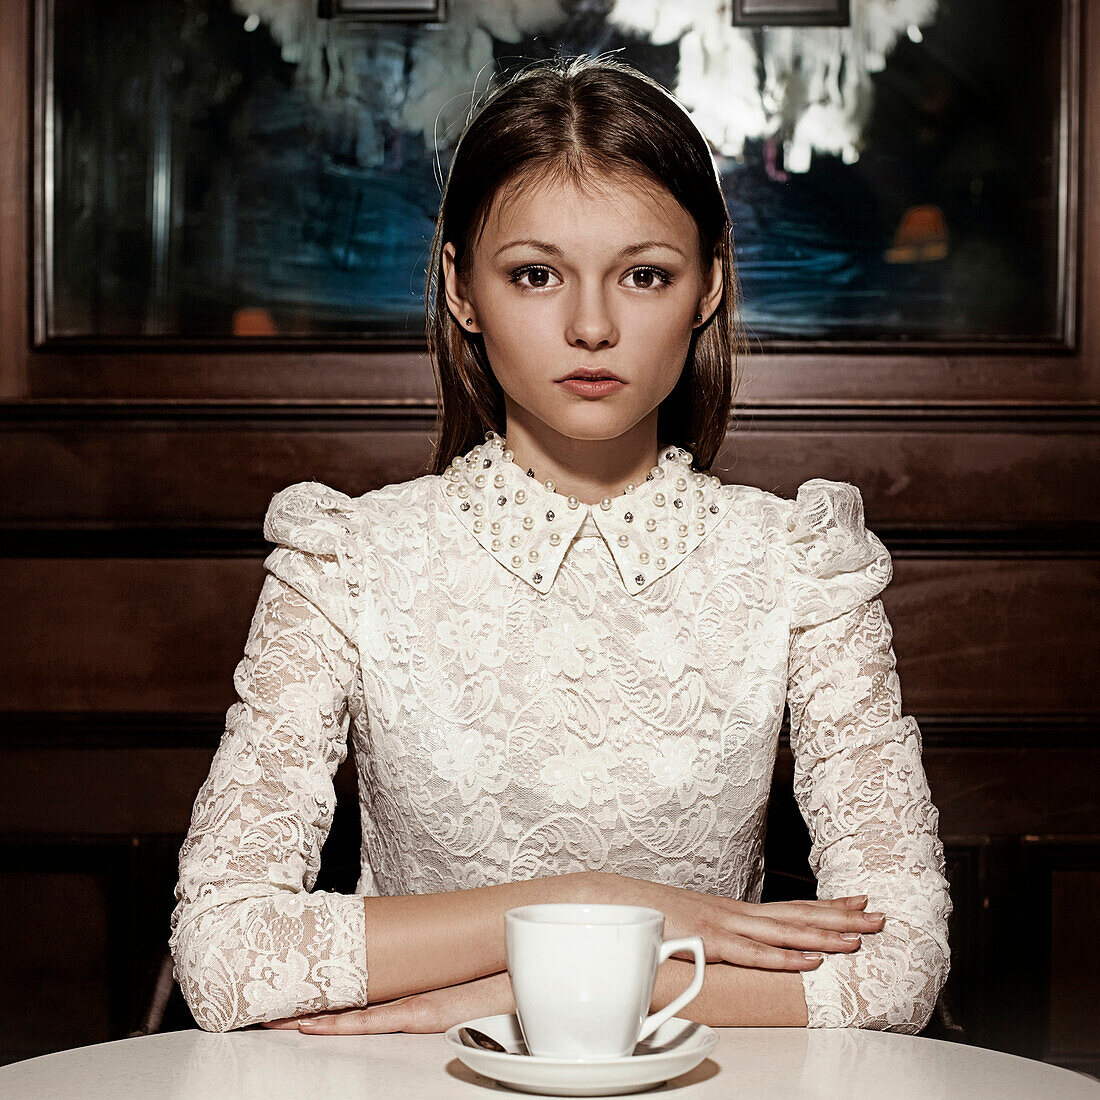 Caucasian teenage girl drinking coffee in restaurant